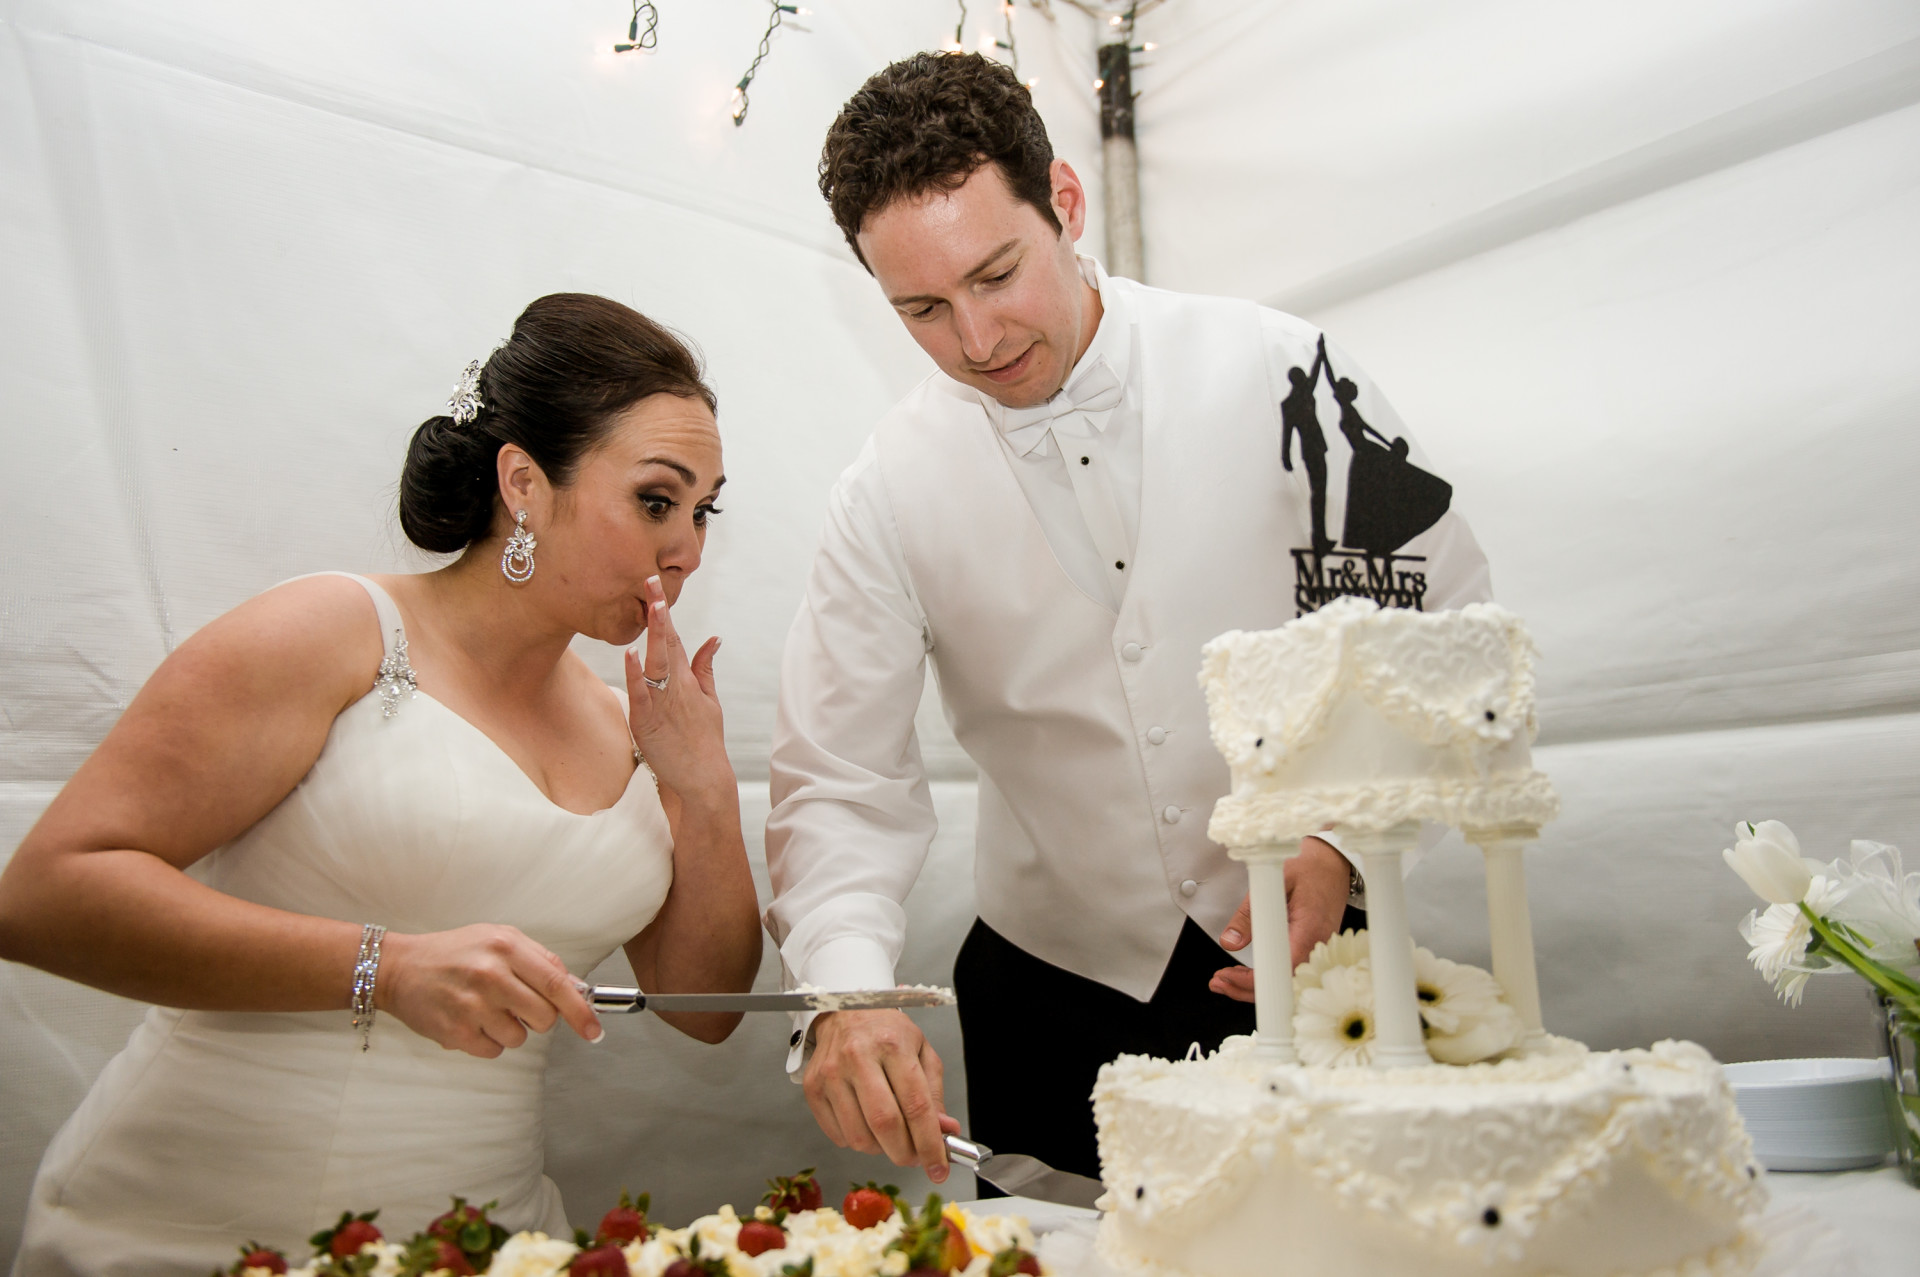 Cake cutting at Morro Bay wedding